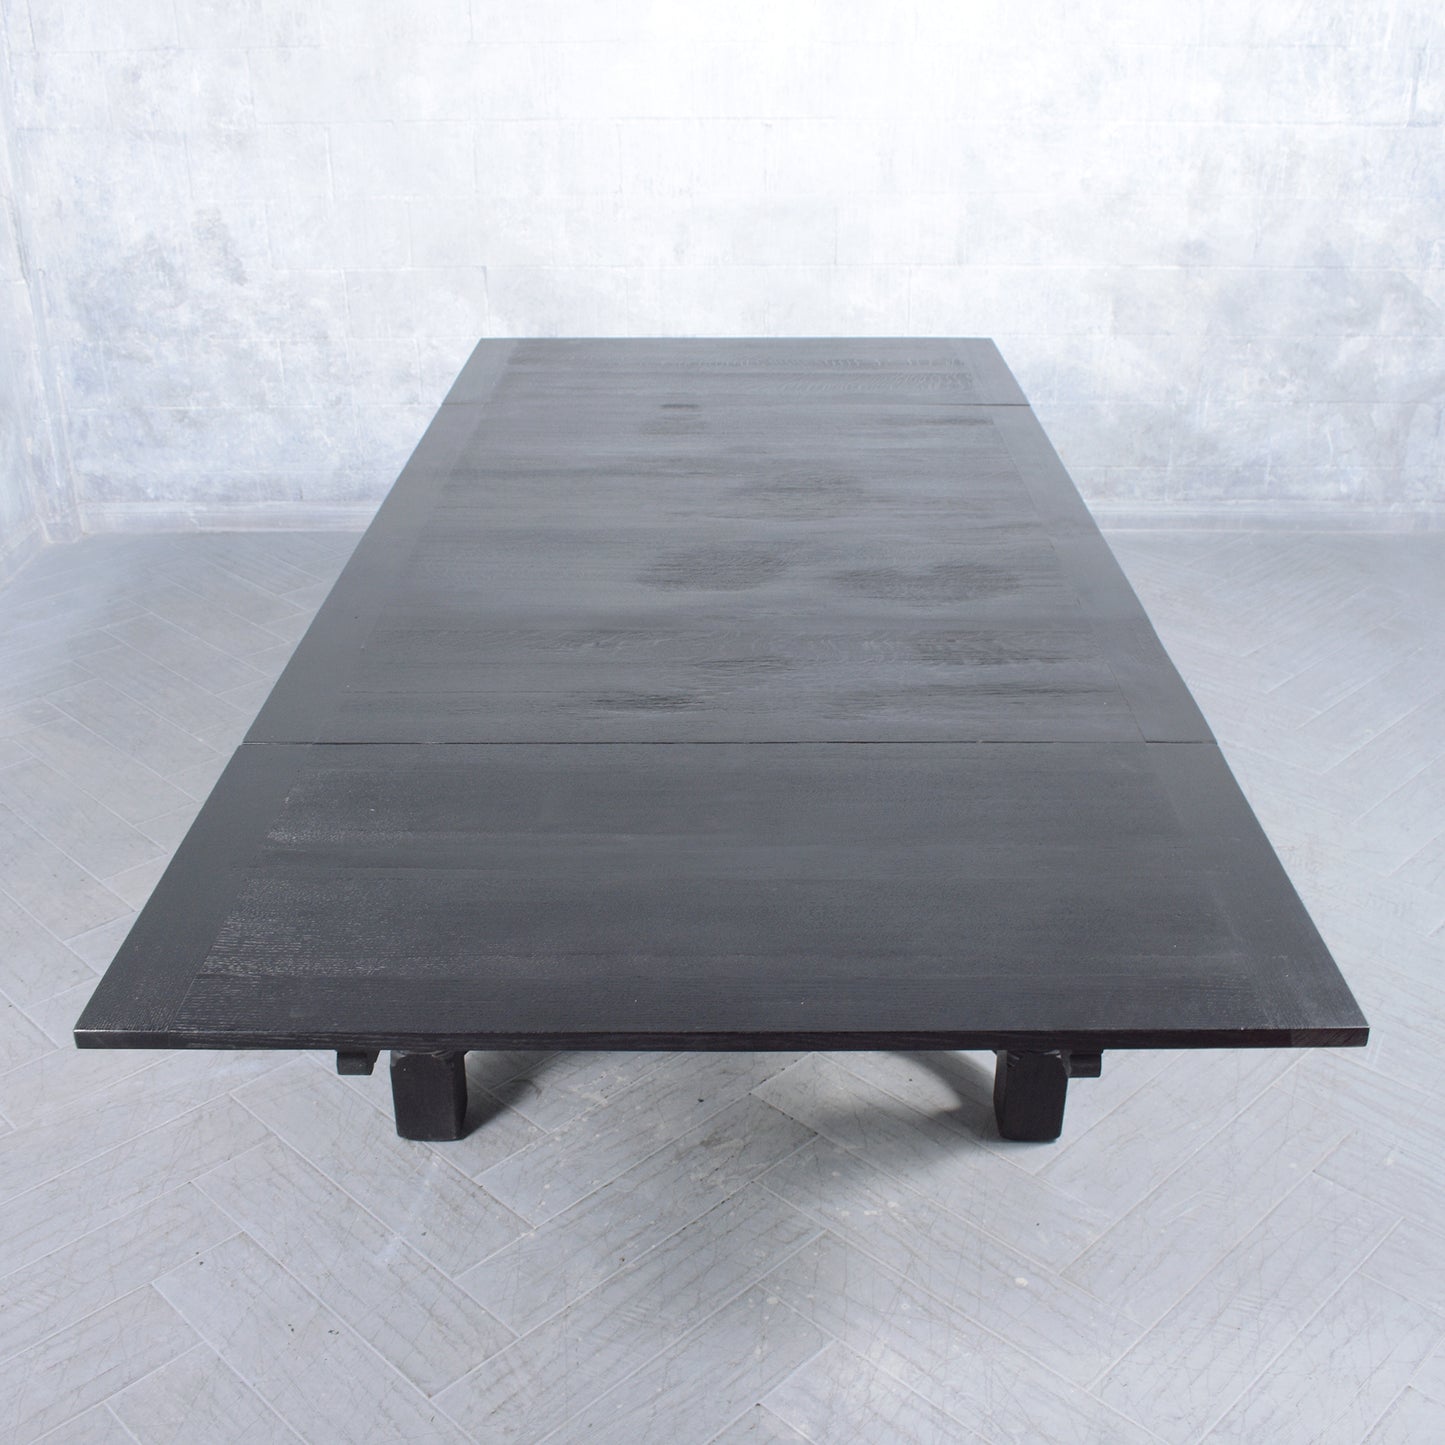 Spanish Colonial Ebonized Extendable Table